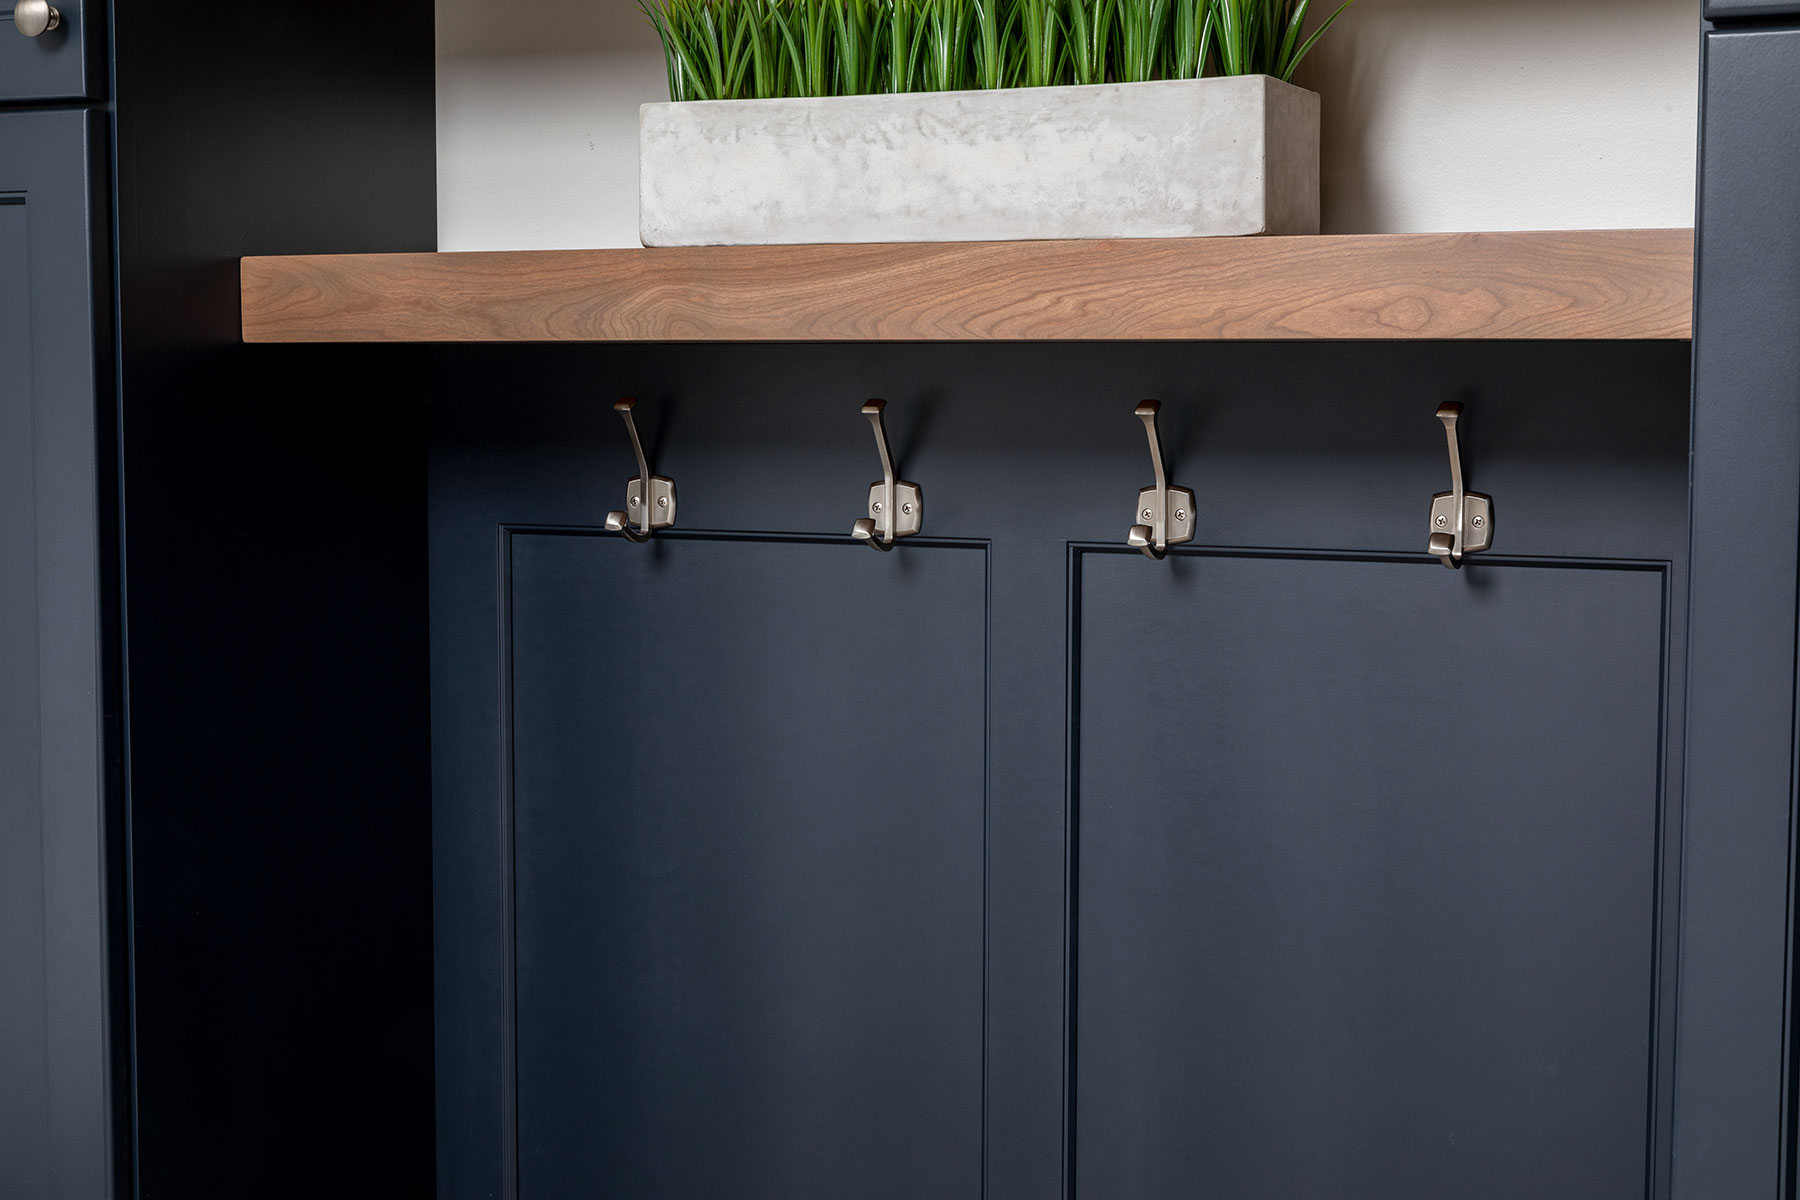 Dark blue cabinets create a drop zone